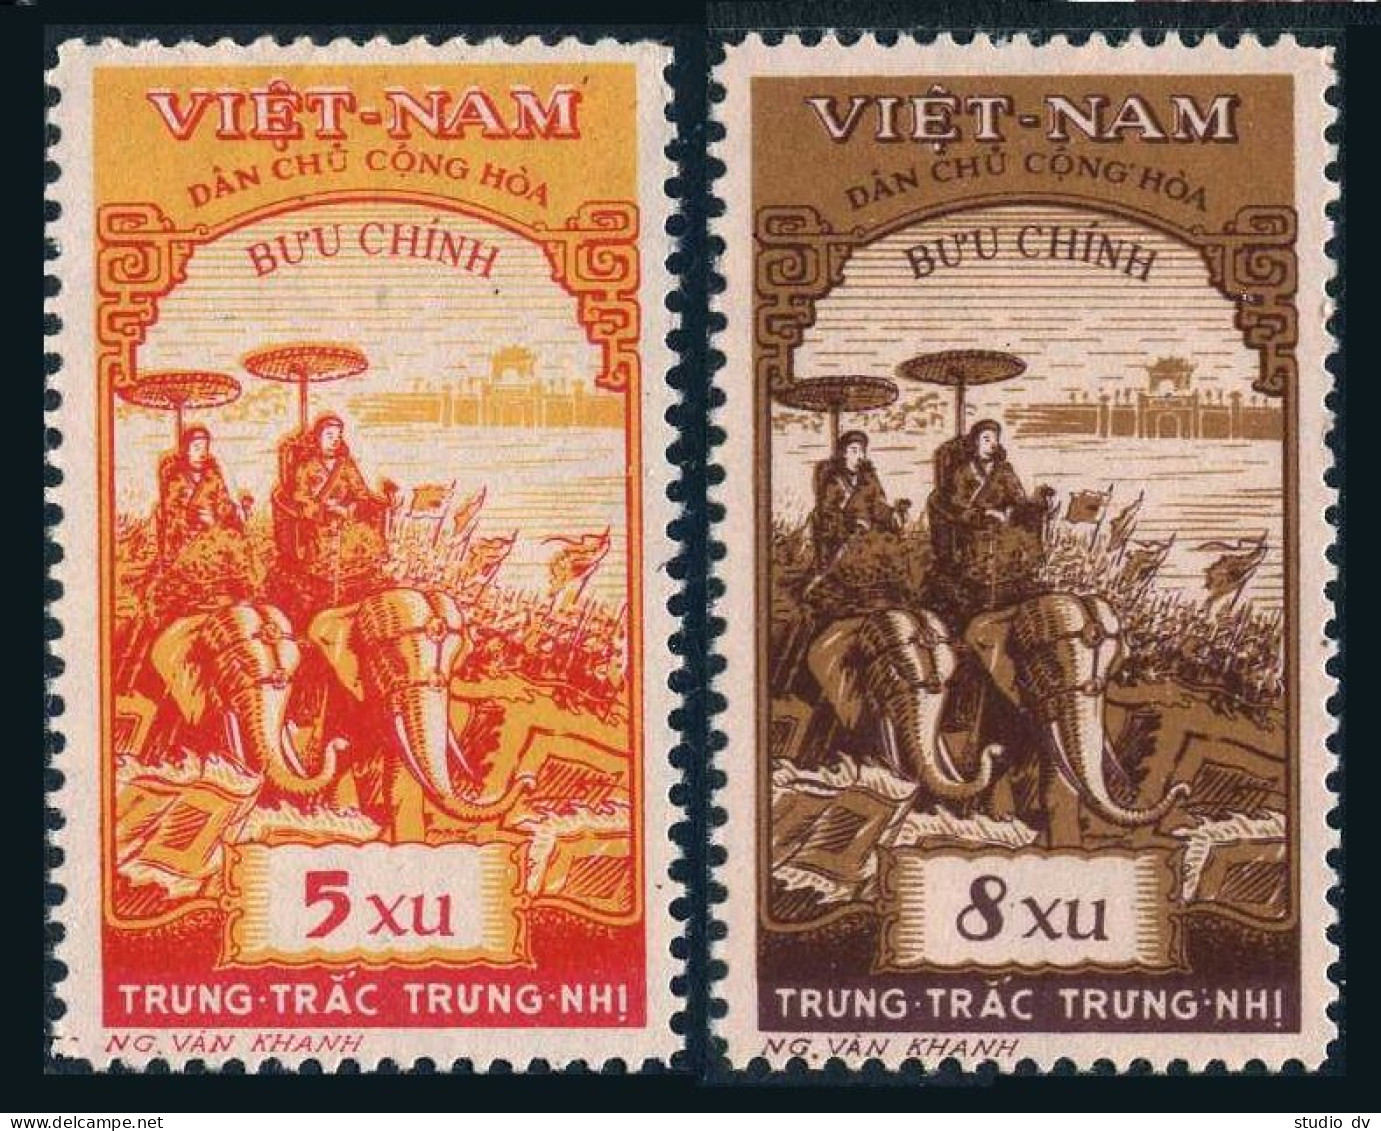 Viet Nam 92-931, MNH. Michel 95-96. Trung Sisters, 1959. Elephants. - Vietnam